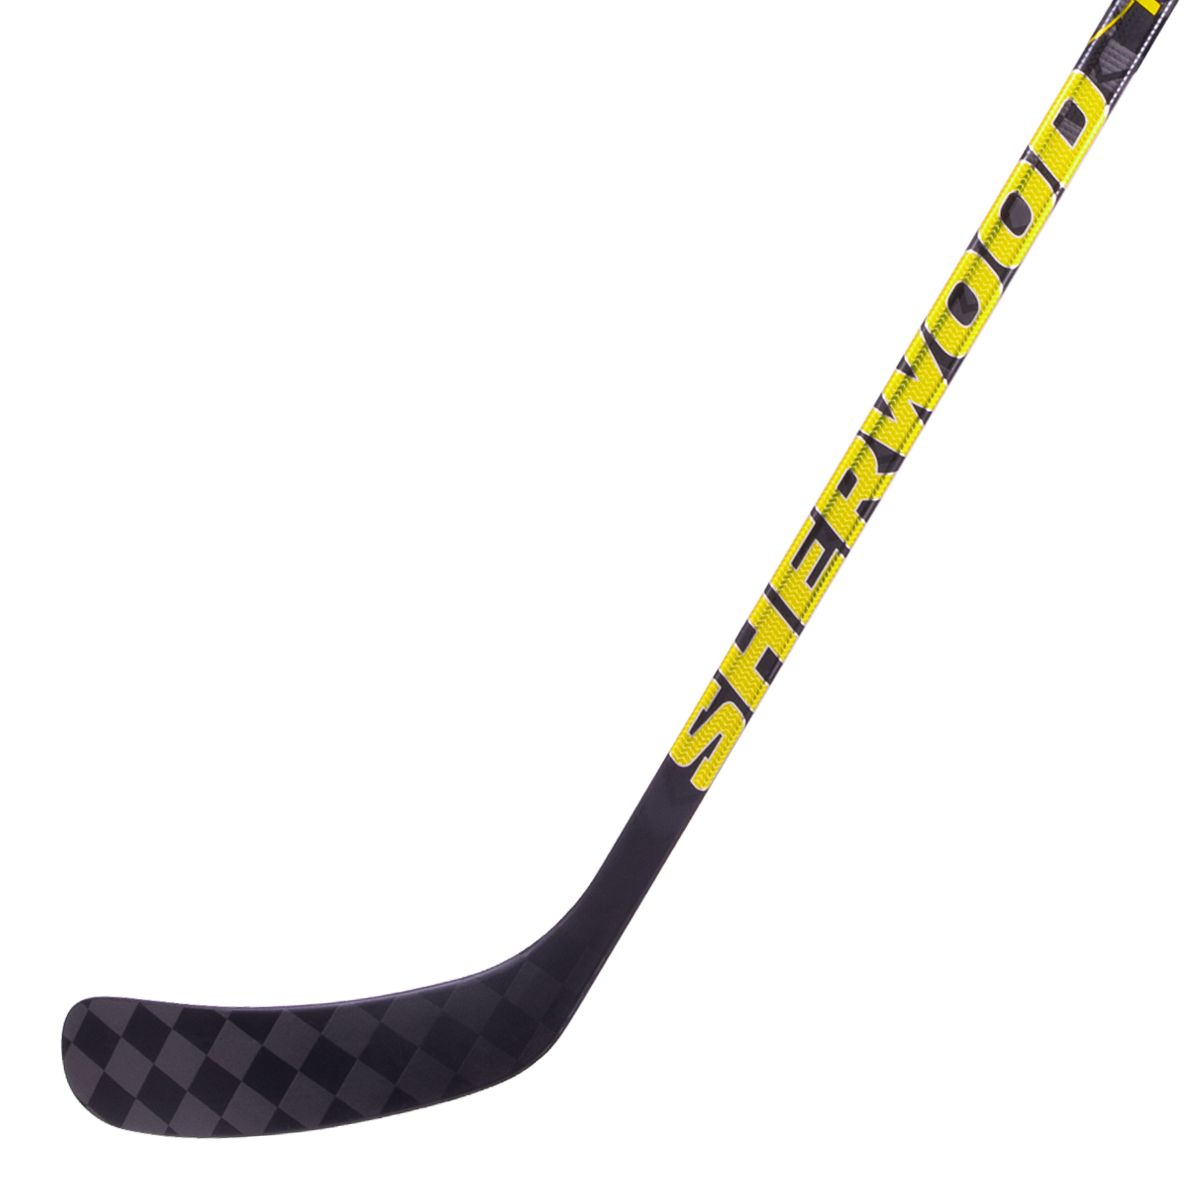 Image of Sherwood Rekker Element 1 Grip Senior Hockey Stick Carbon Fiber Low Kick